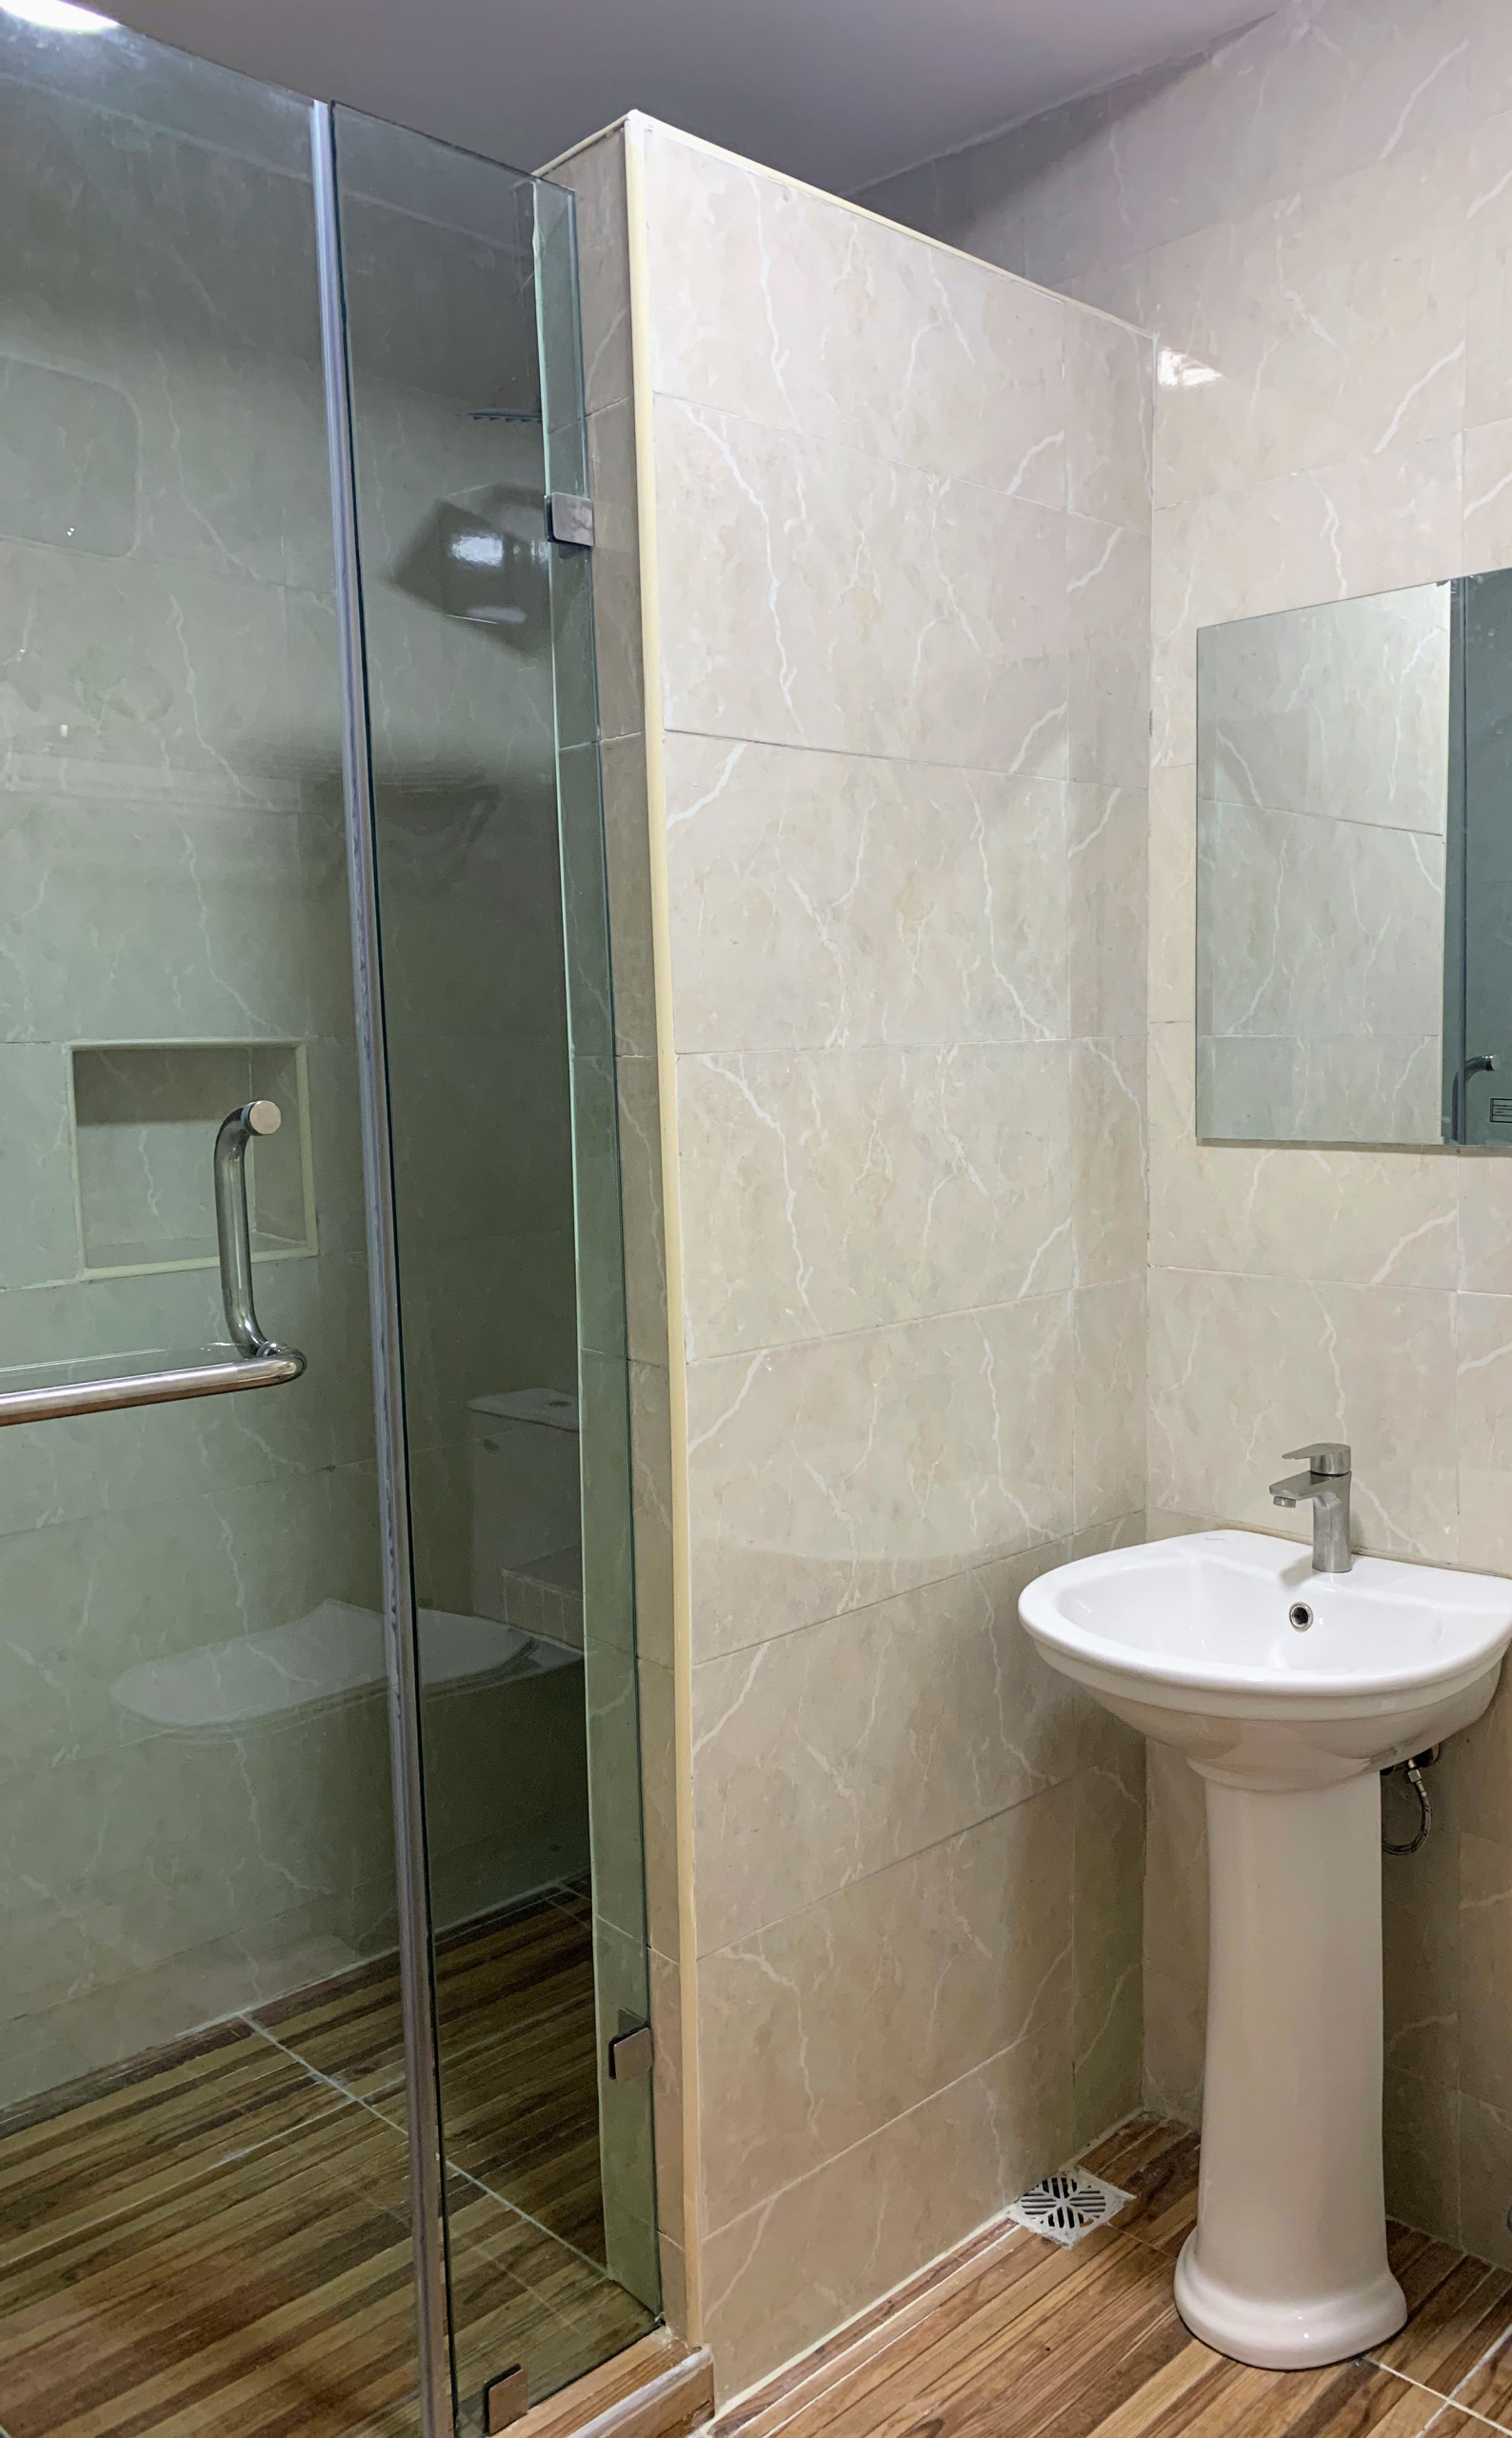 Bathroom shower room with laminate effect floor tiles